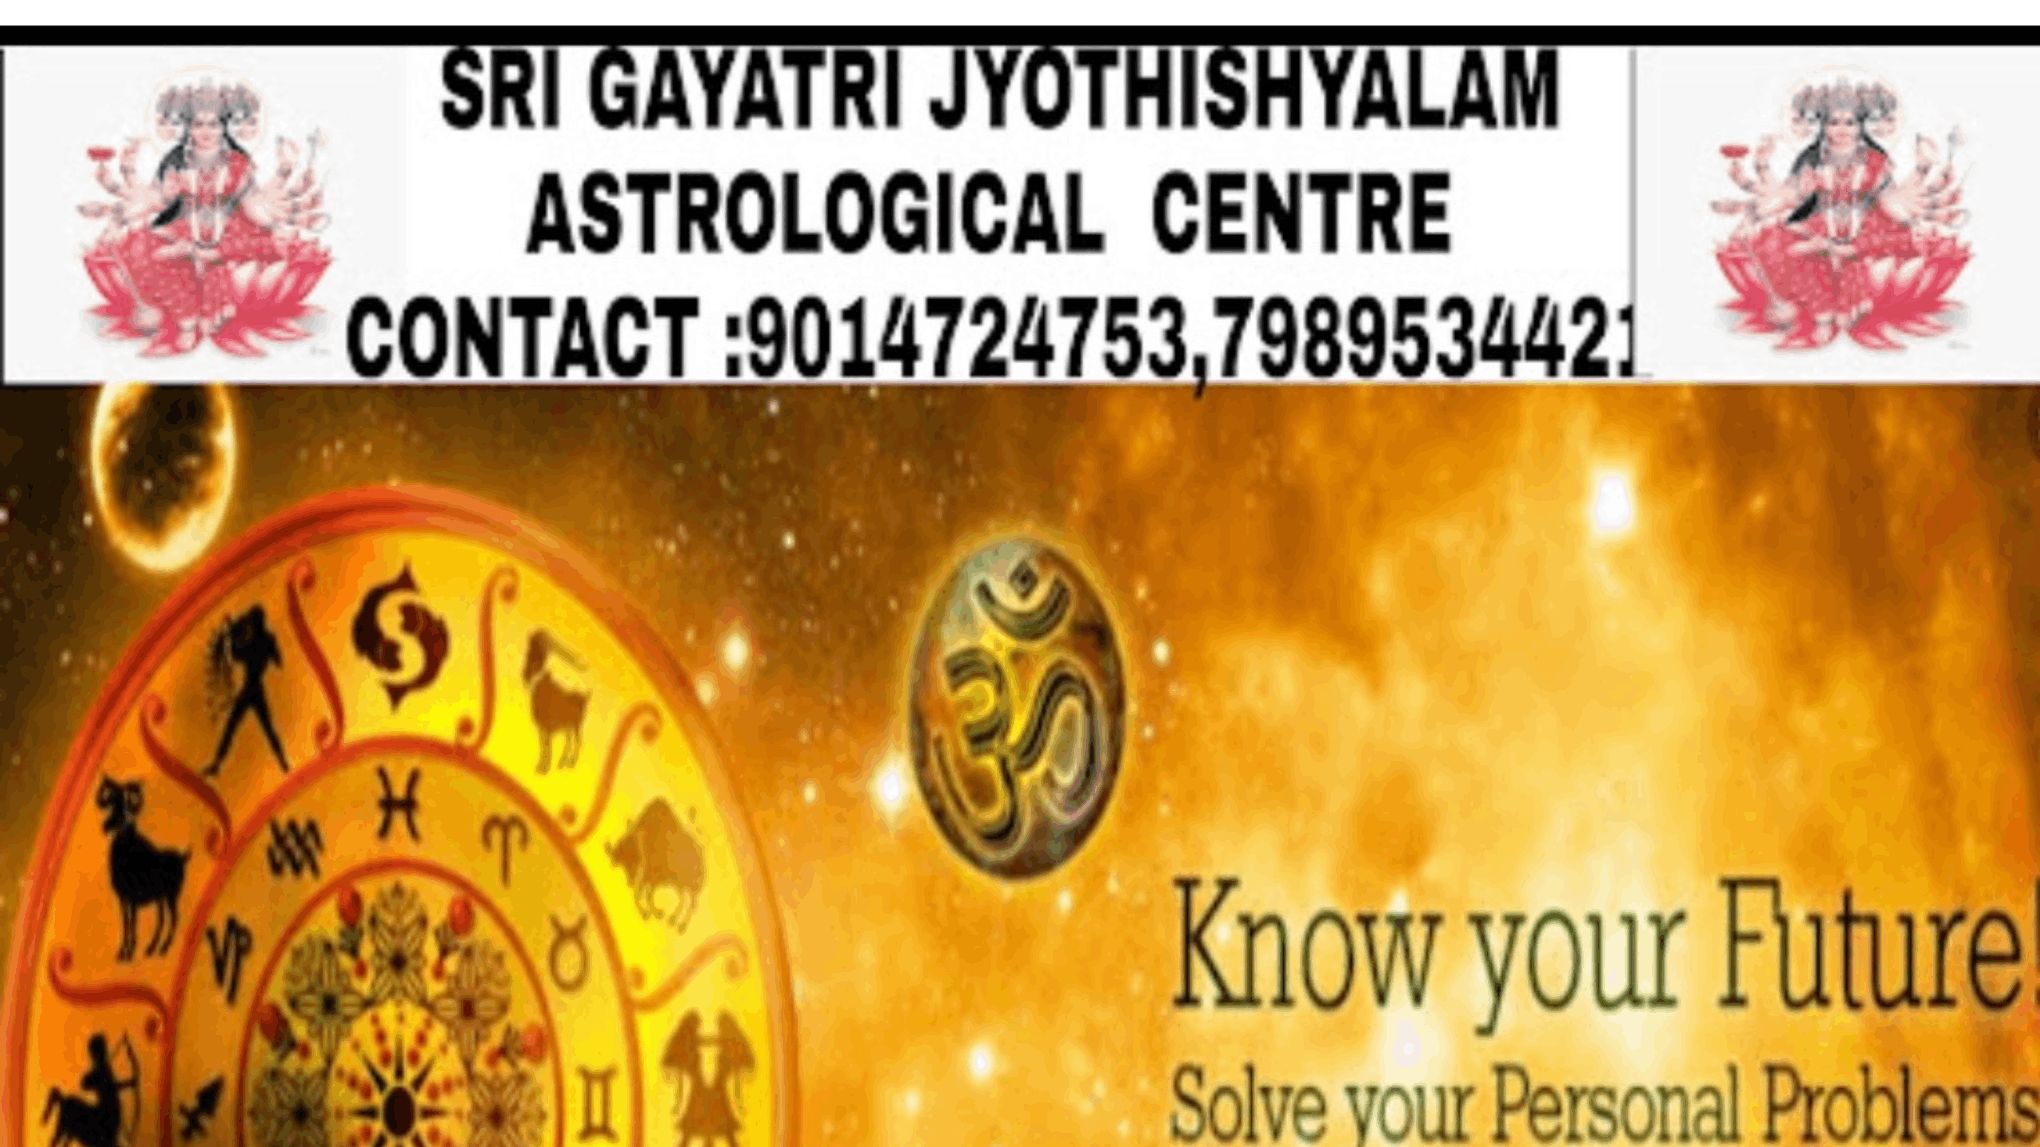 Horoscope creation, Numerologist, Palmist, Vaastu Consultants, Astrologer; Exp: More than 15 year